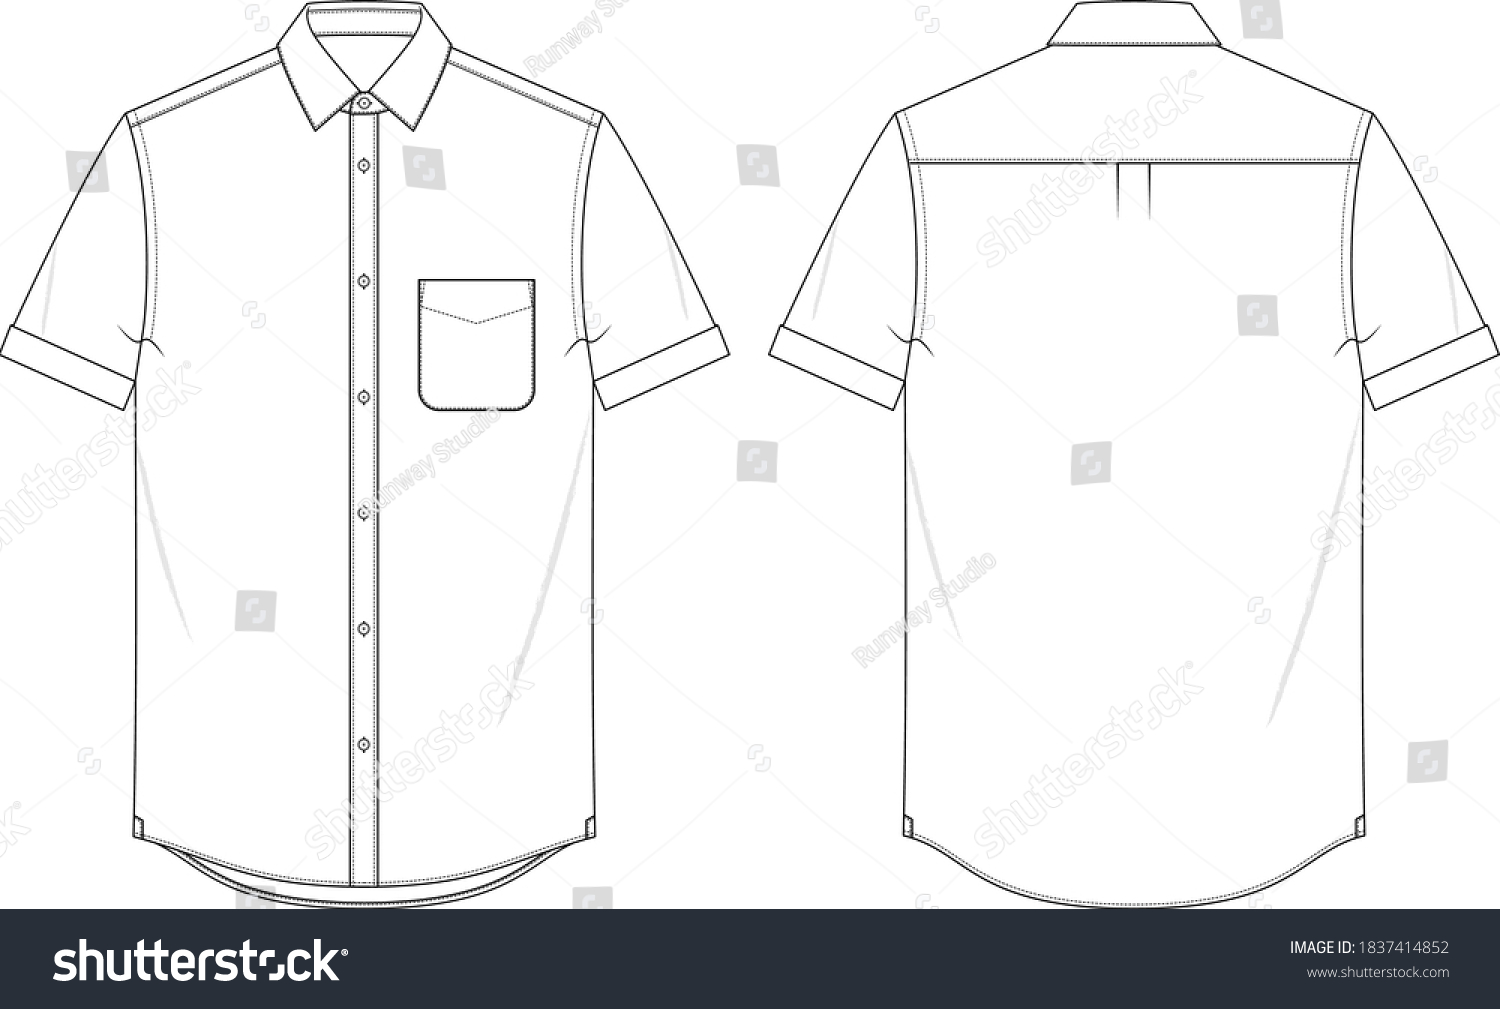 Short sleeve button up shirt Images, Stock Photos & Vectors | Shutterstock